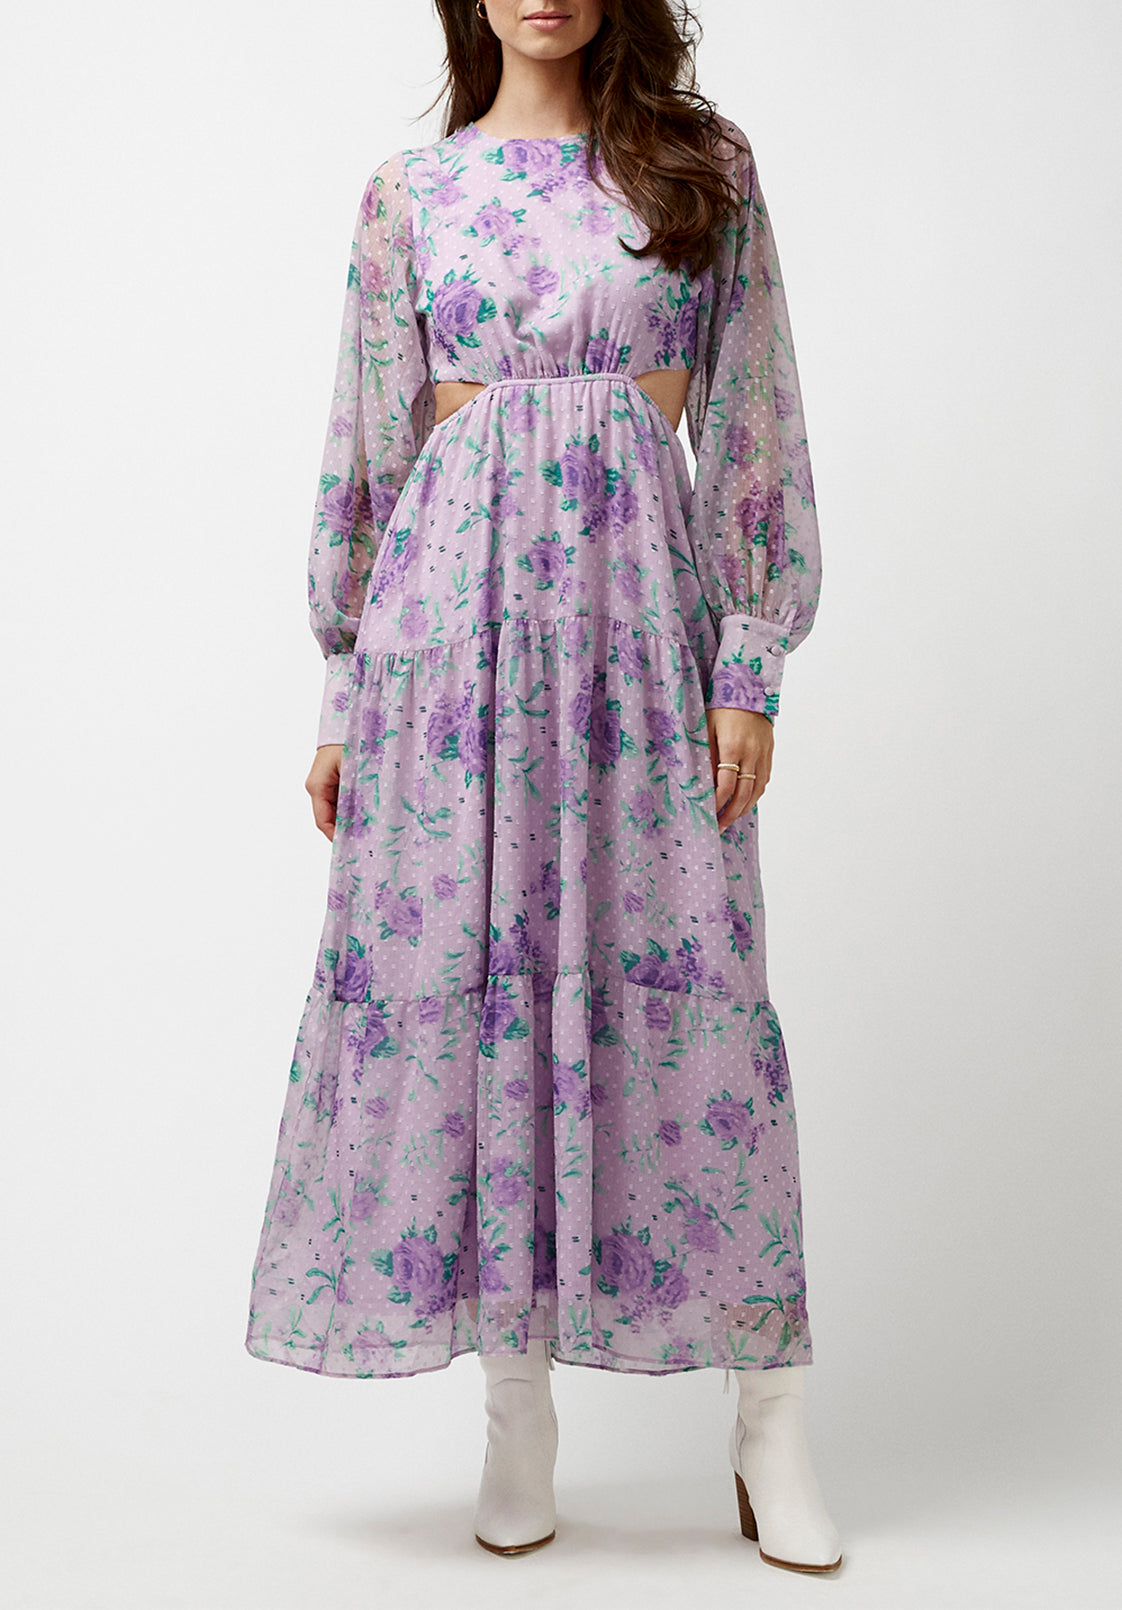 Marceline Women's Cut Out & Tiered Dress in Purple Floral - WD0531P